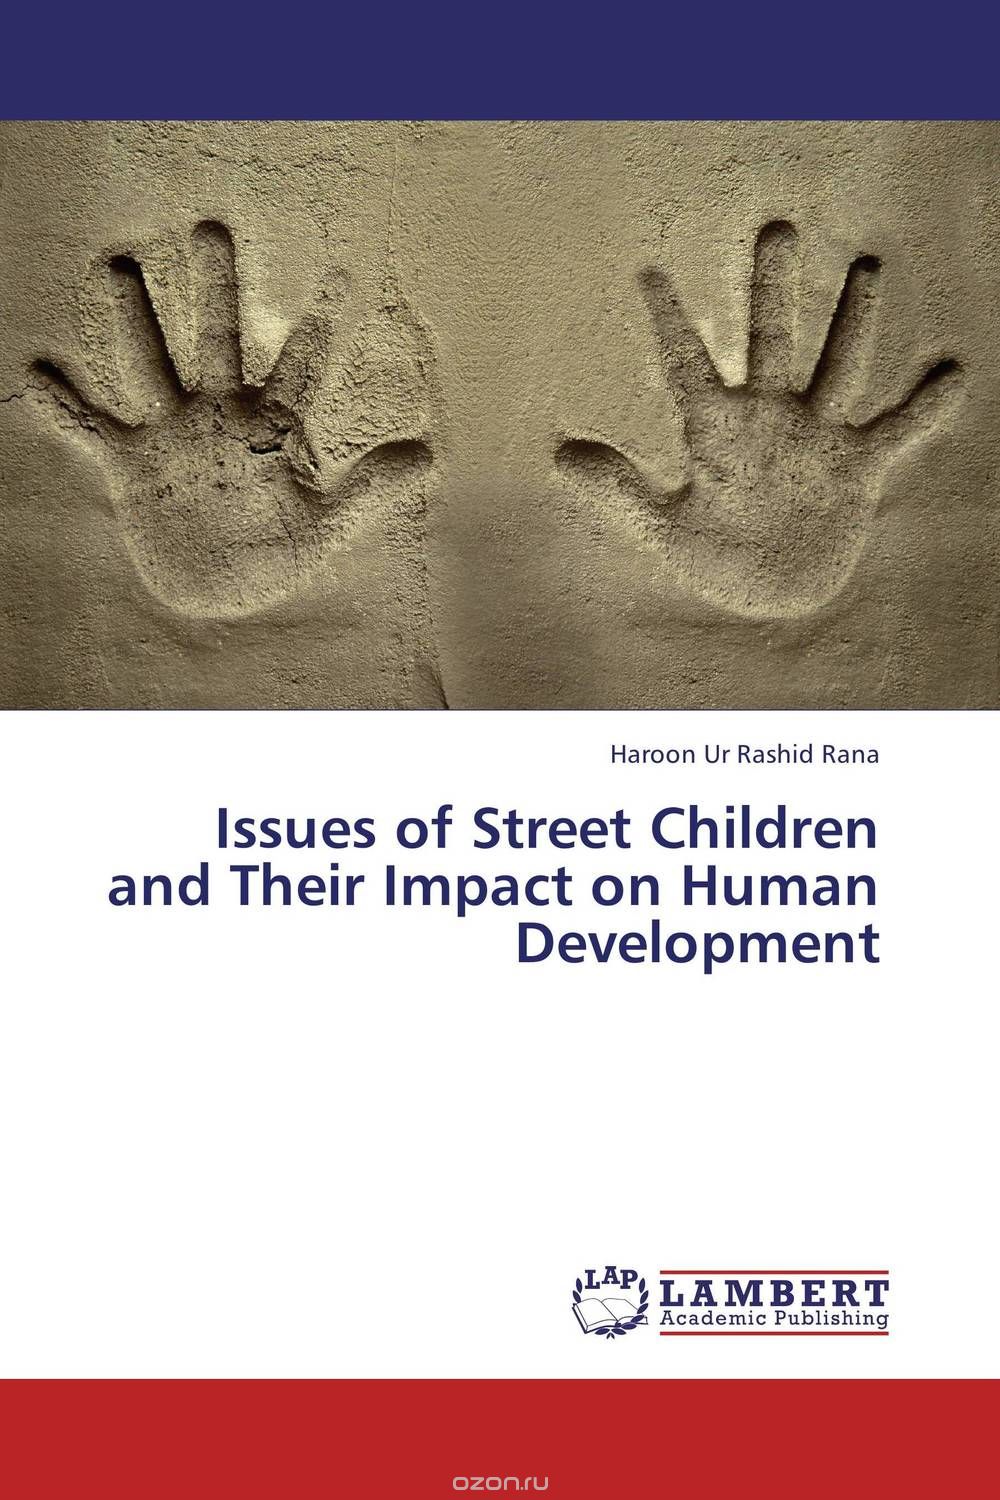 Скачать книгу "Issues of Street Children and Their Impact on Human Development"